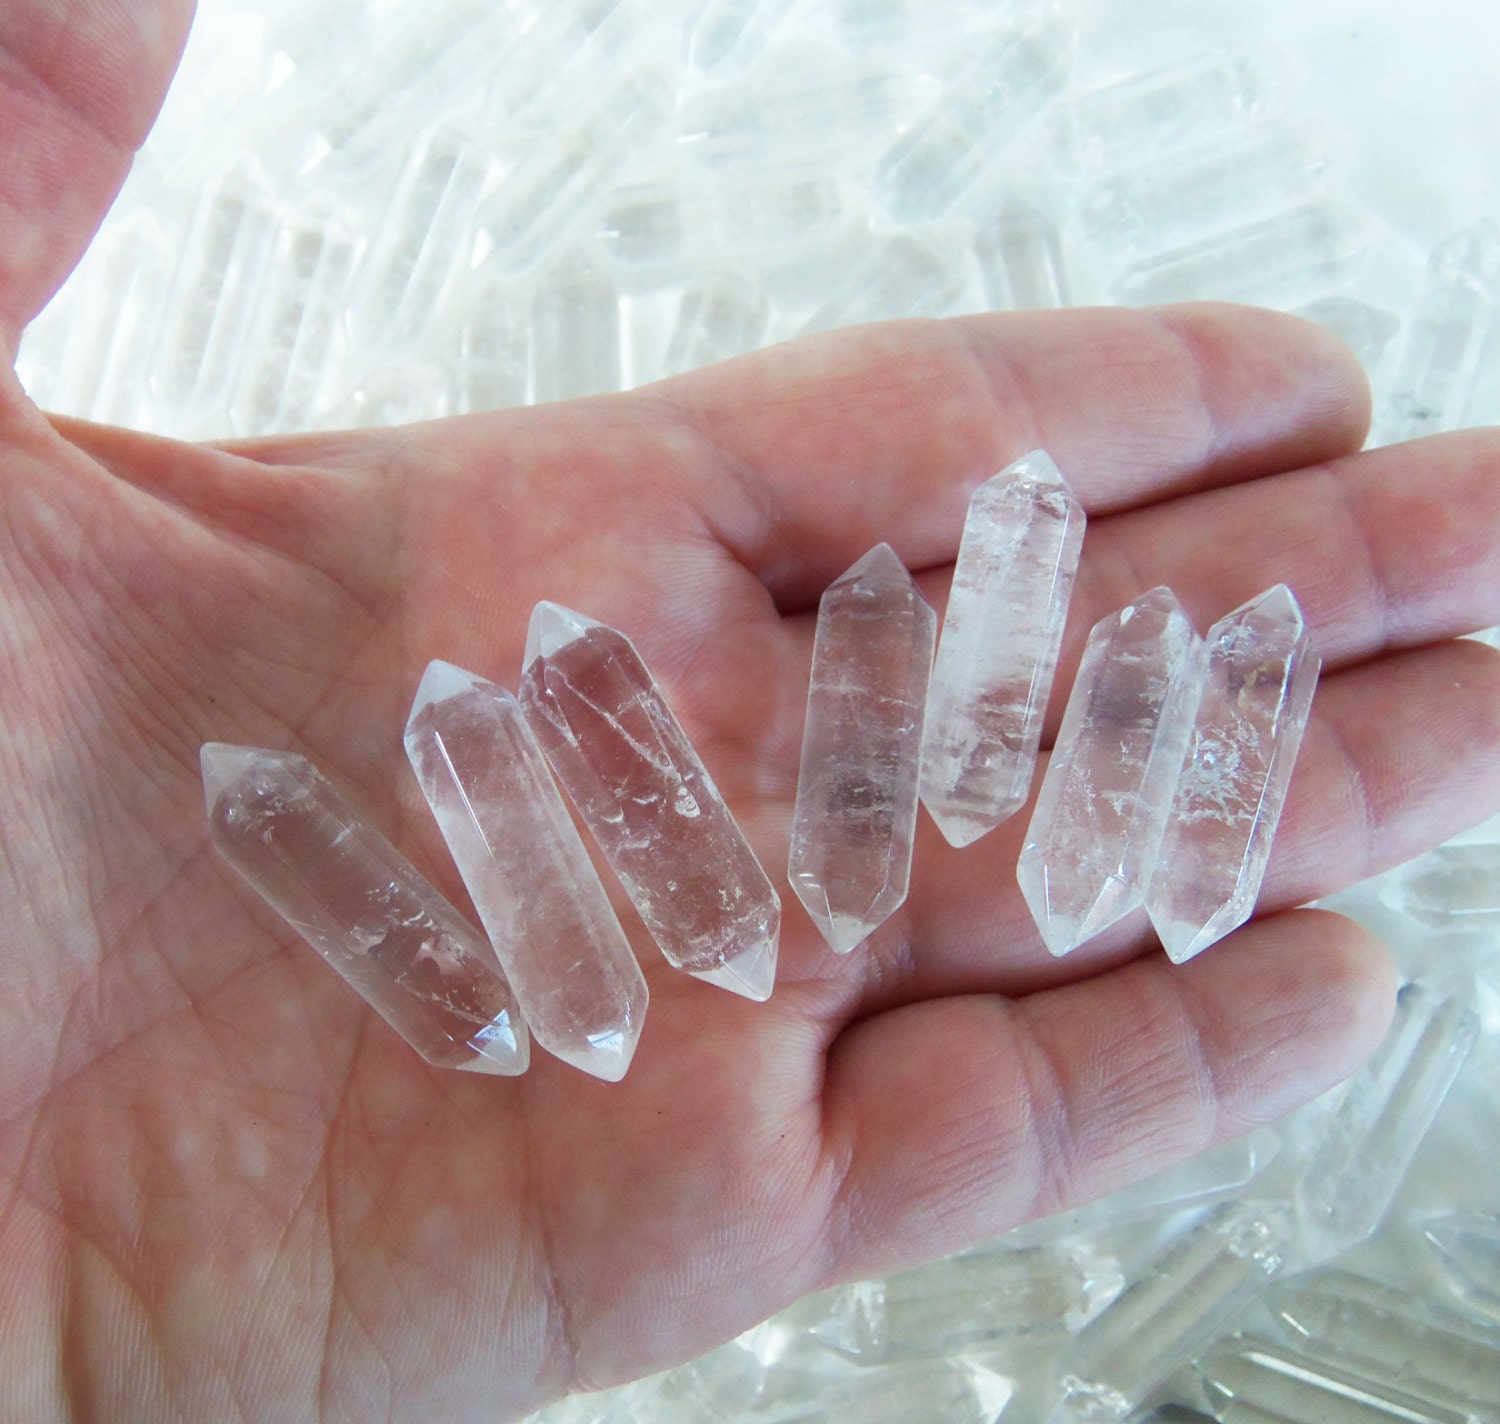 clear quartz crystal uses